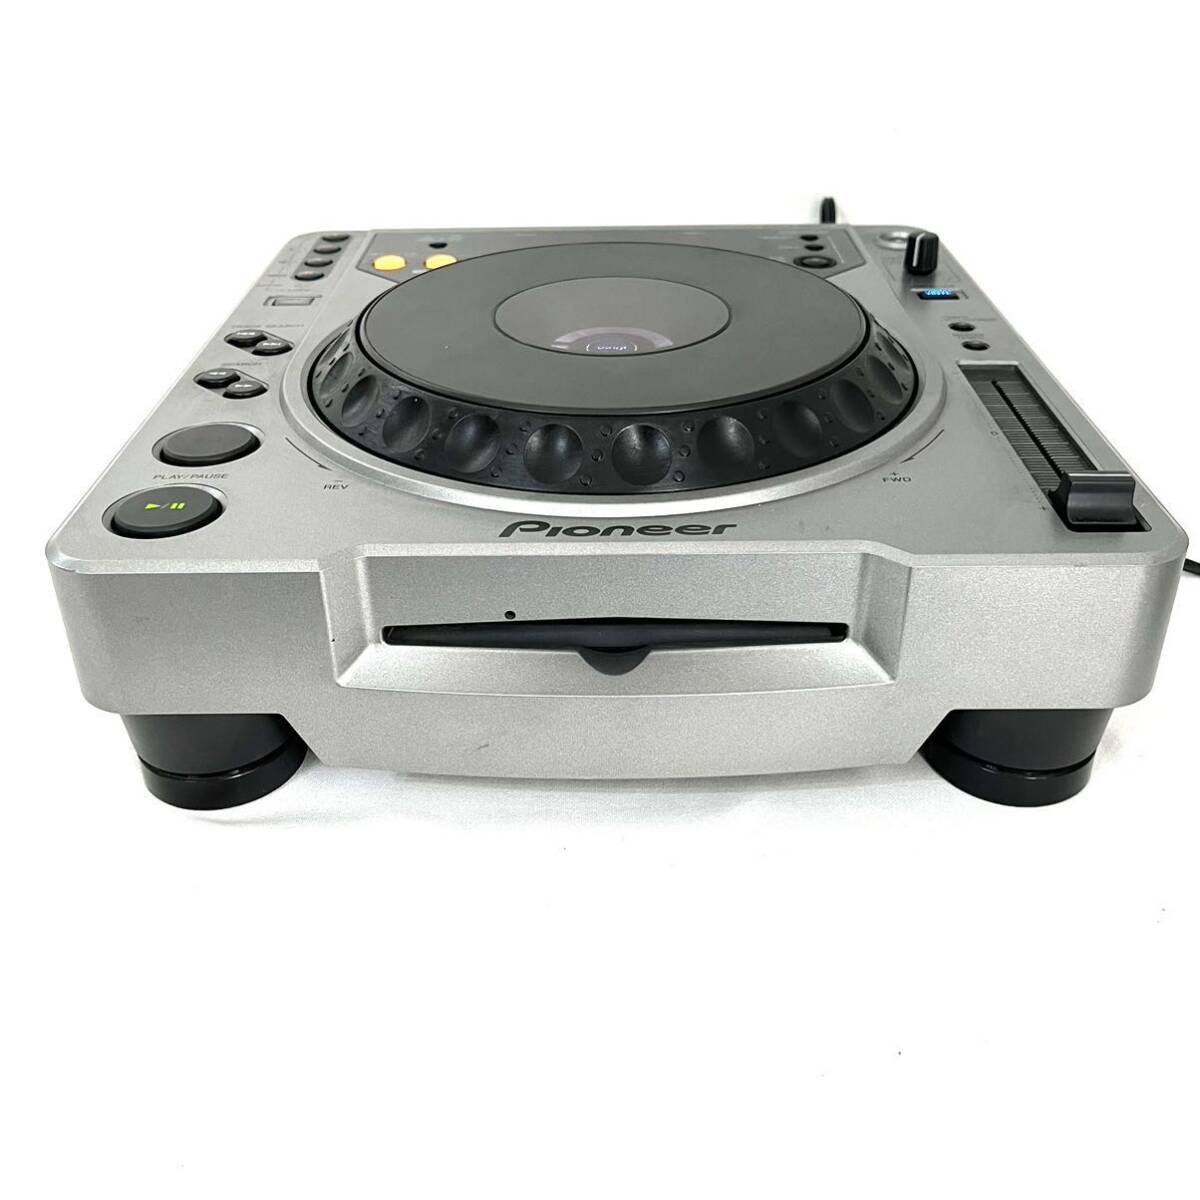 [ operation verification settled ]PIONEER Pioneer CD player CDJ-800 DJ equipment 